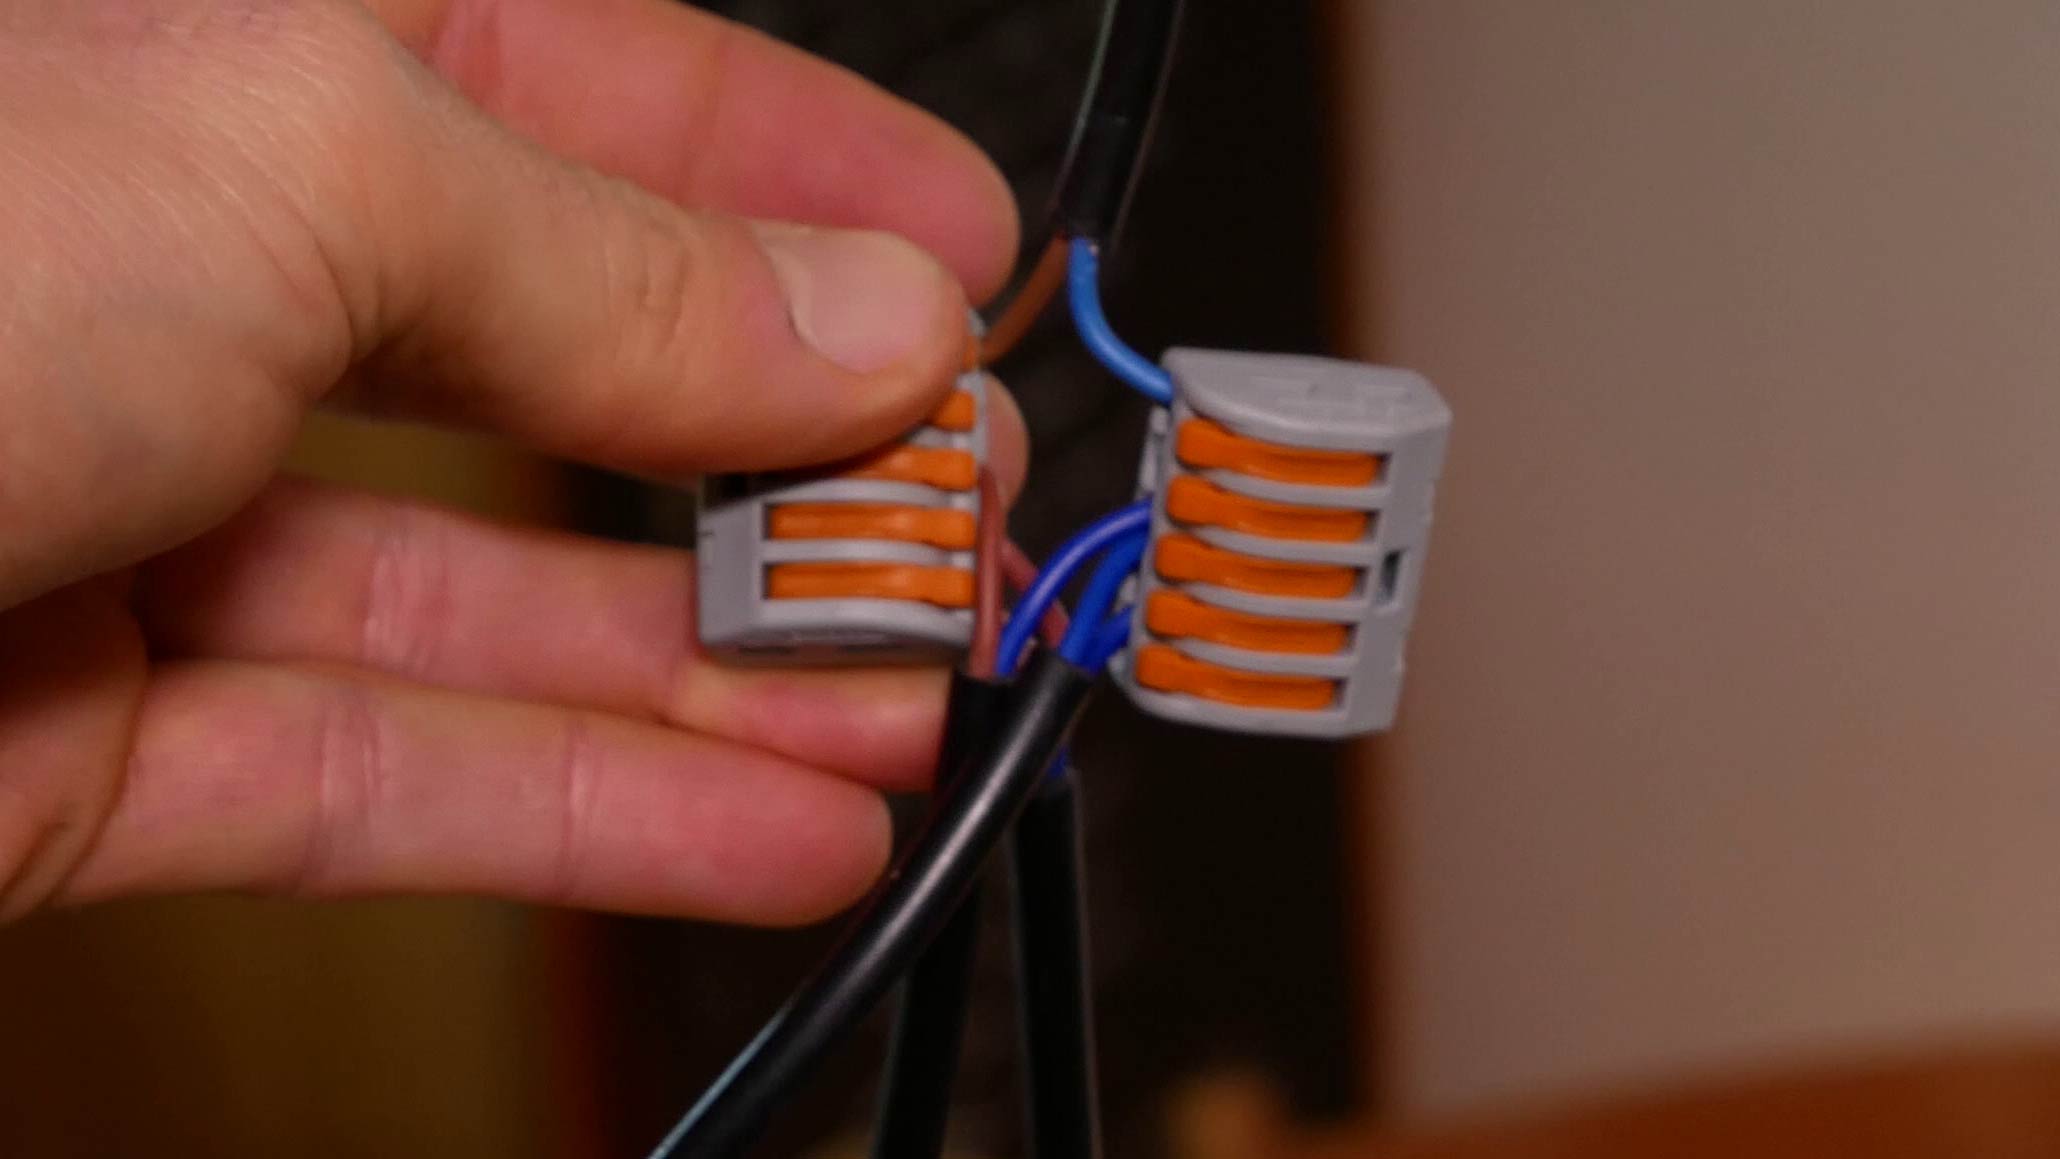 Lampe anschließen - ein Kabel, mehrere Lampen verkabeln - Made by